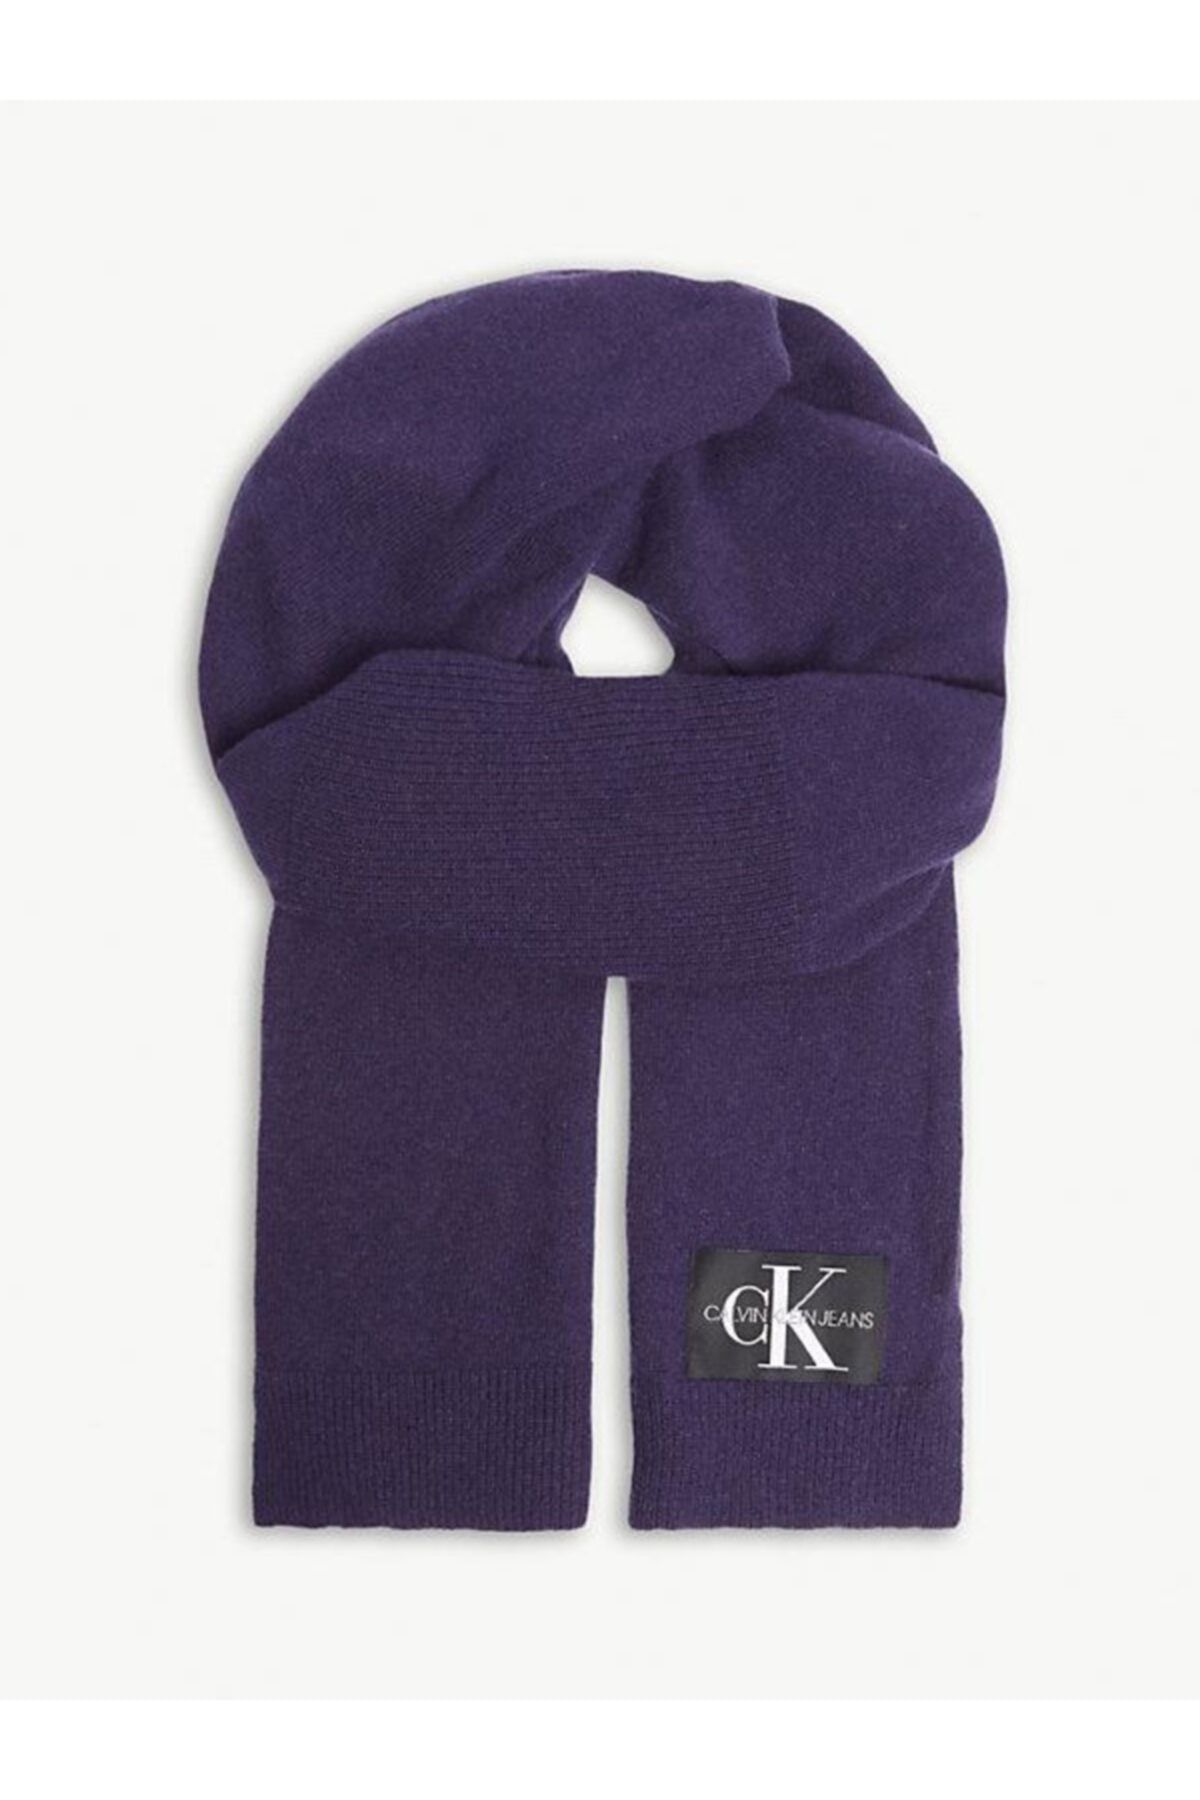 Calvin Klein Parachute Purple Kadın J Basic Women Knitted Şal K60k604789